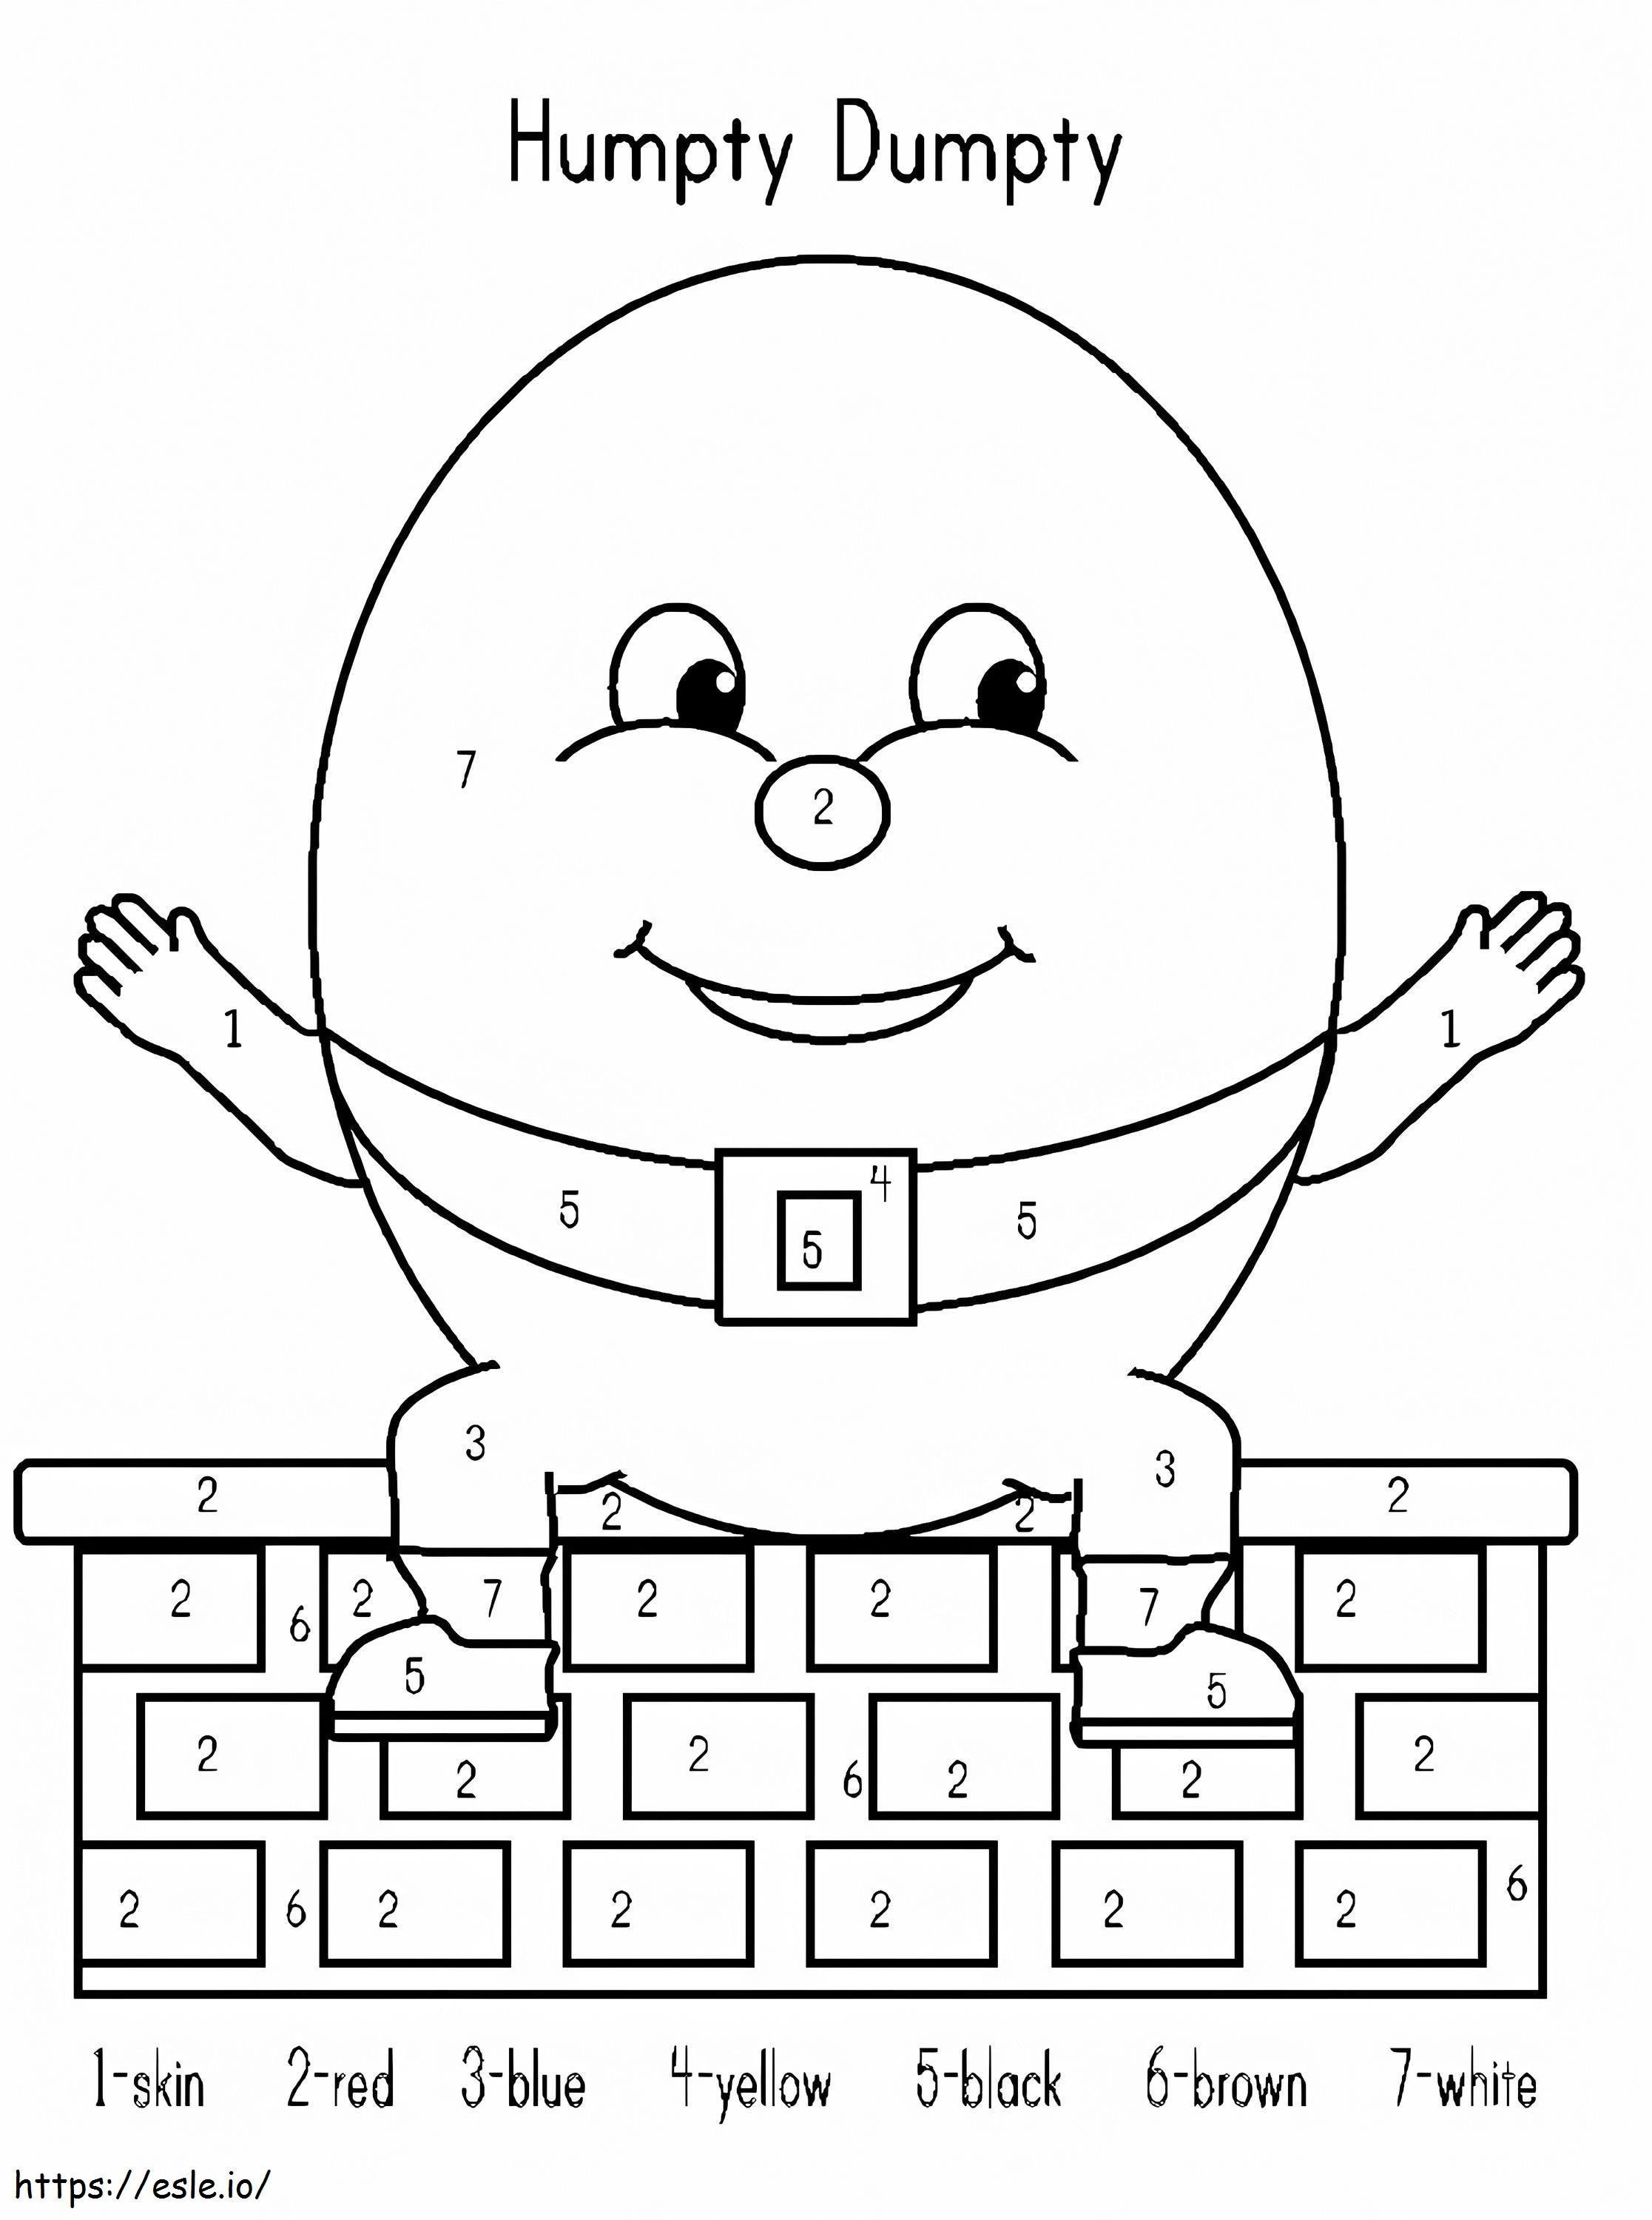 Humpty Dumpty-kleur kleurplaat kleurplaat